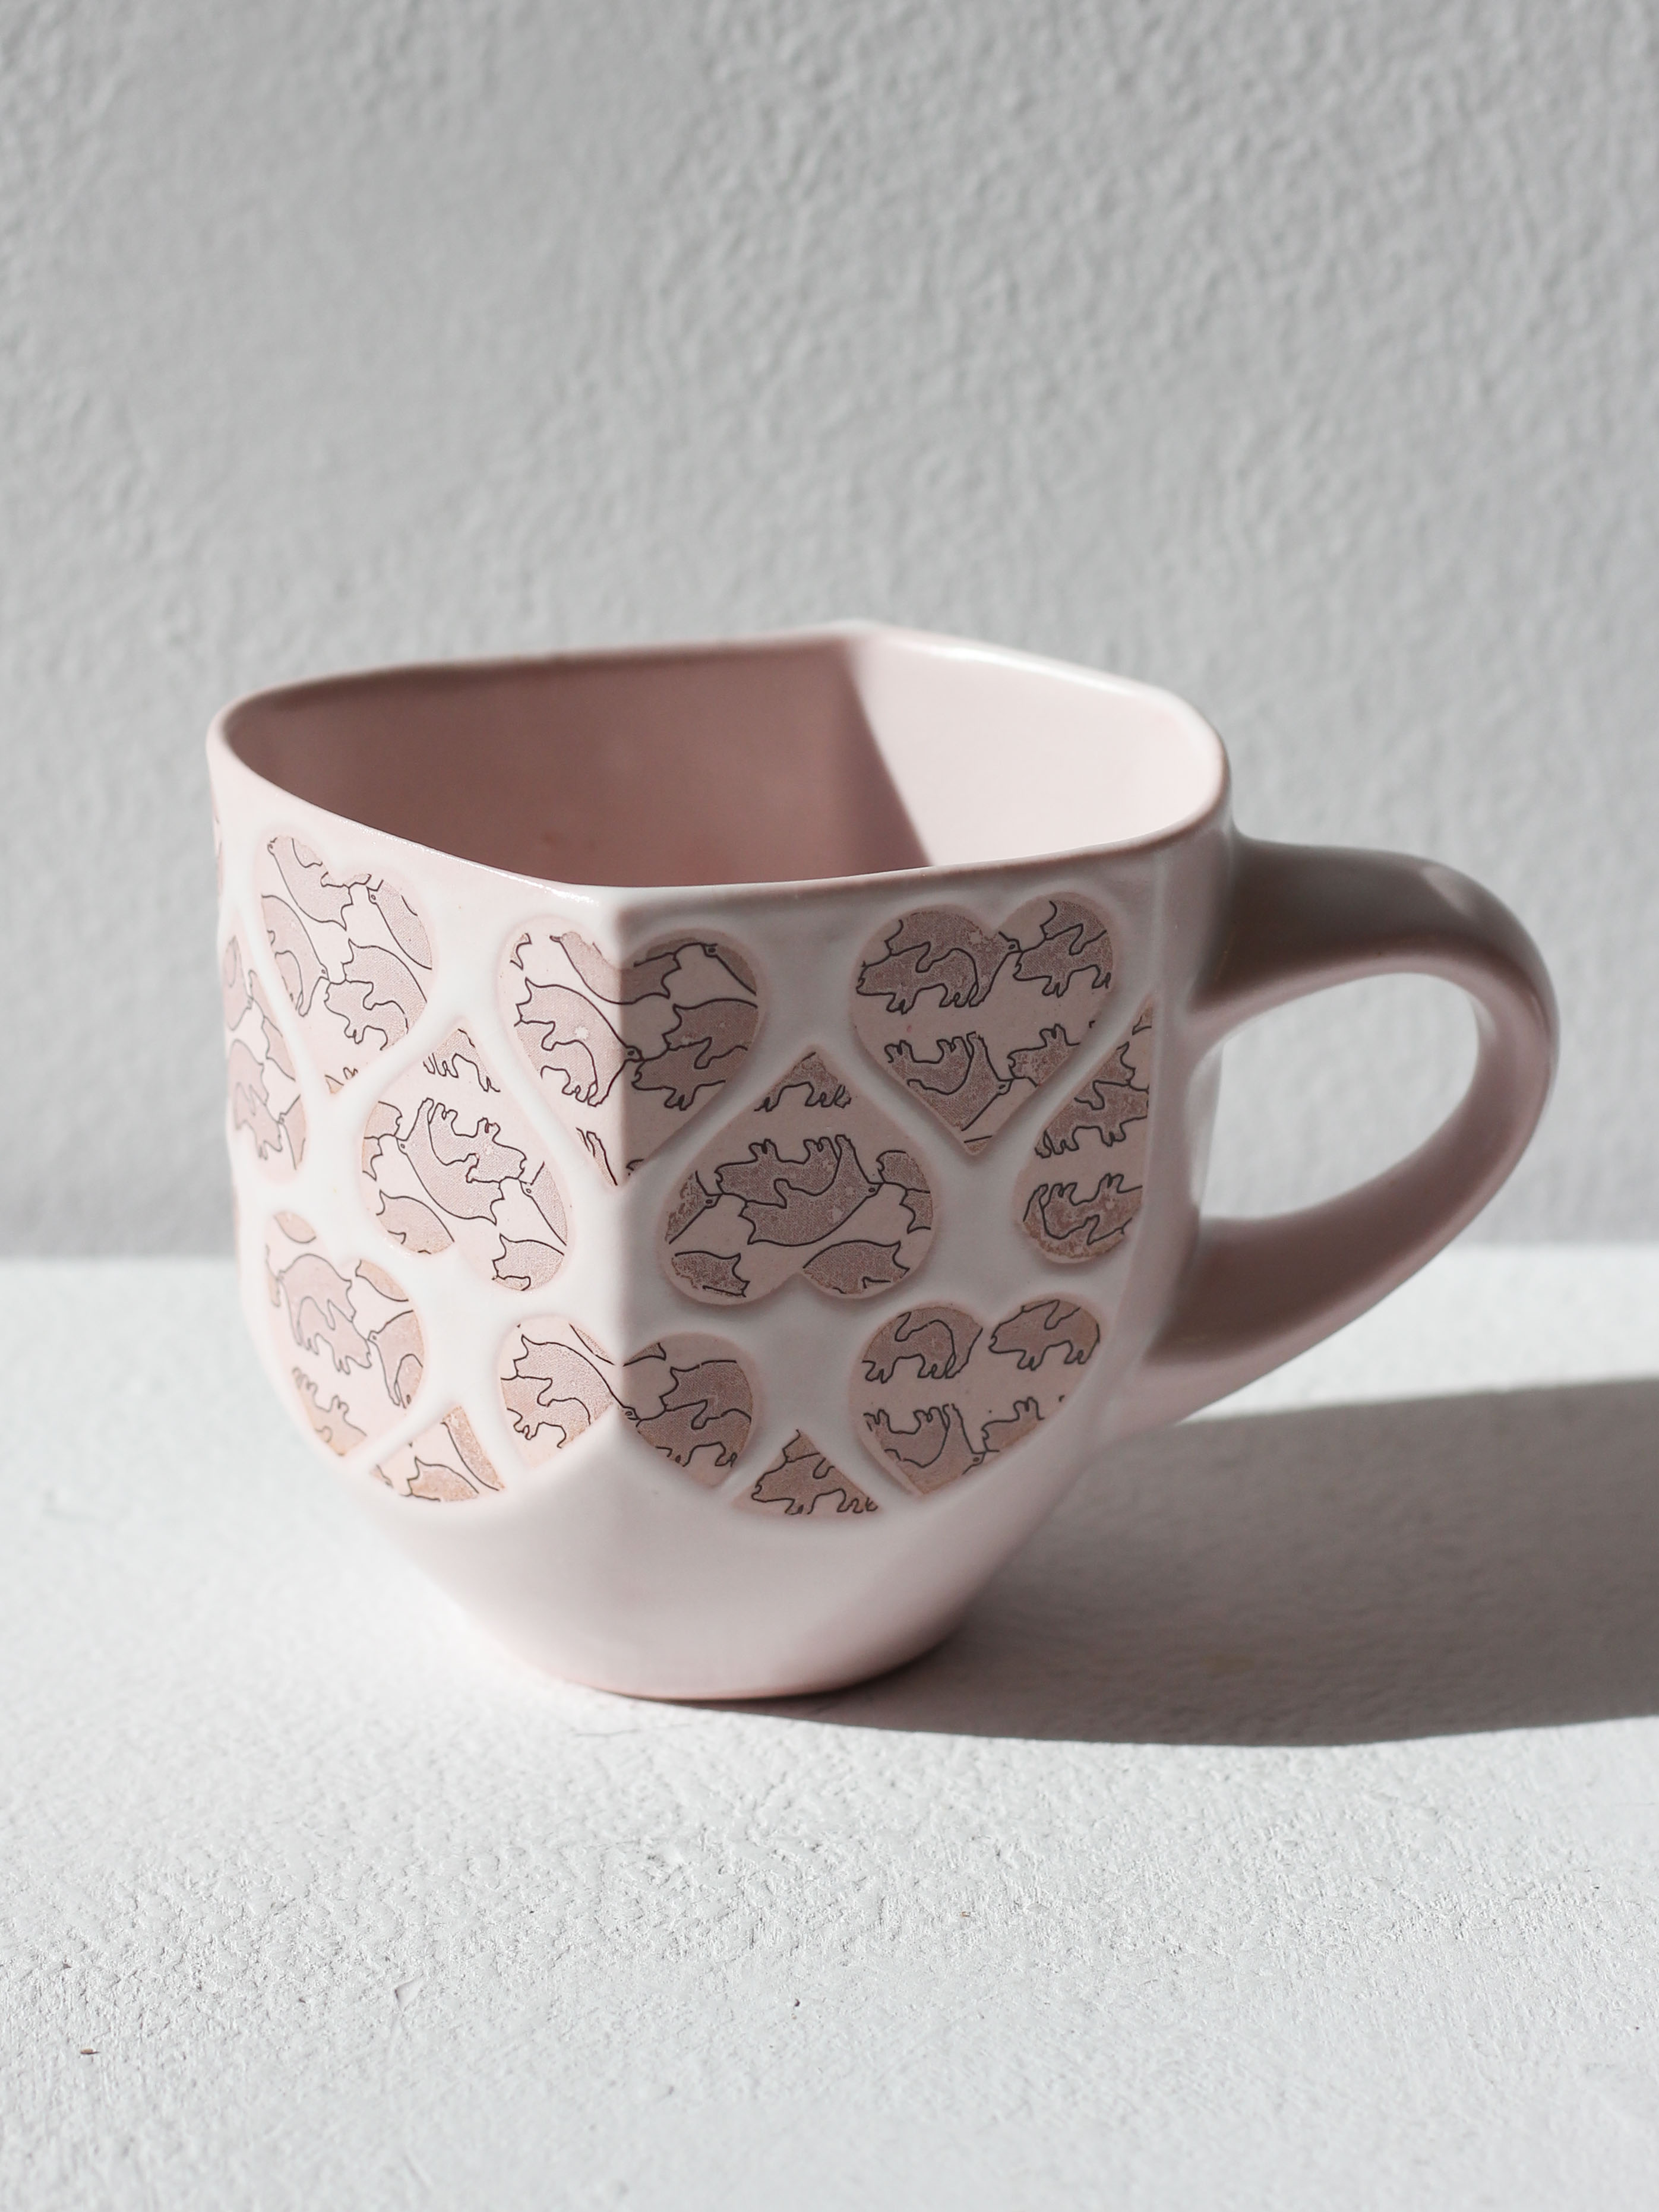 Ceramic mug by Andrew Gilliat $56